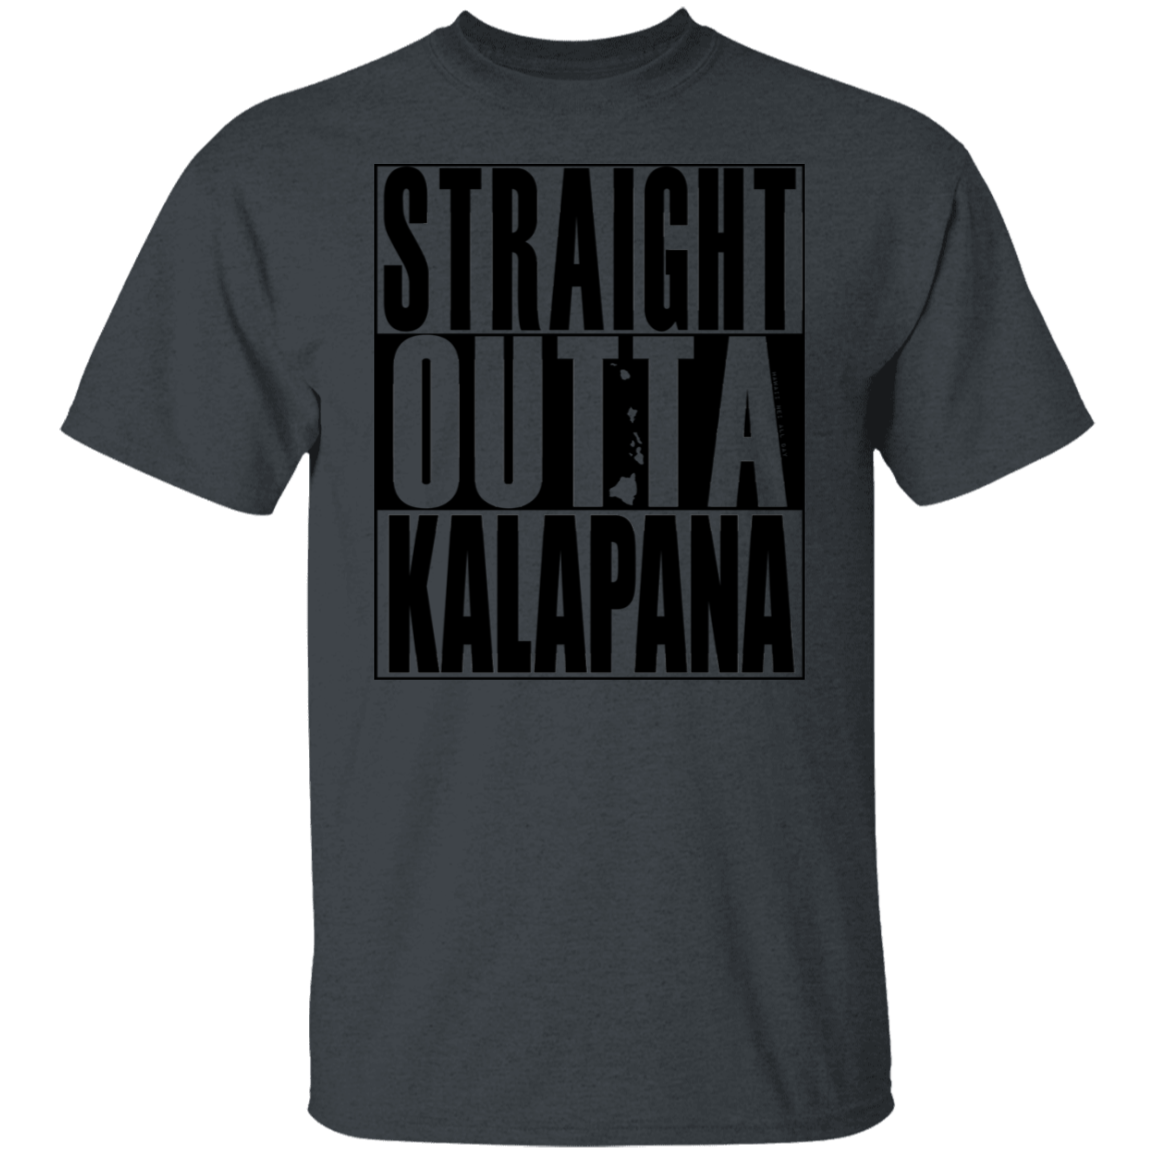 Straight Outta Kalapana (black ink) T-Shirt